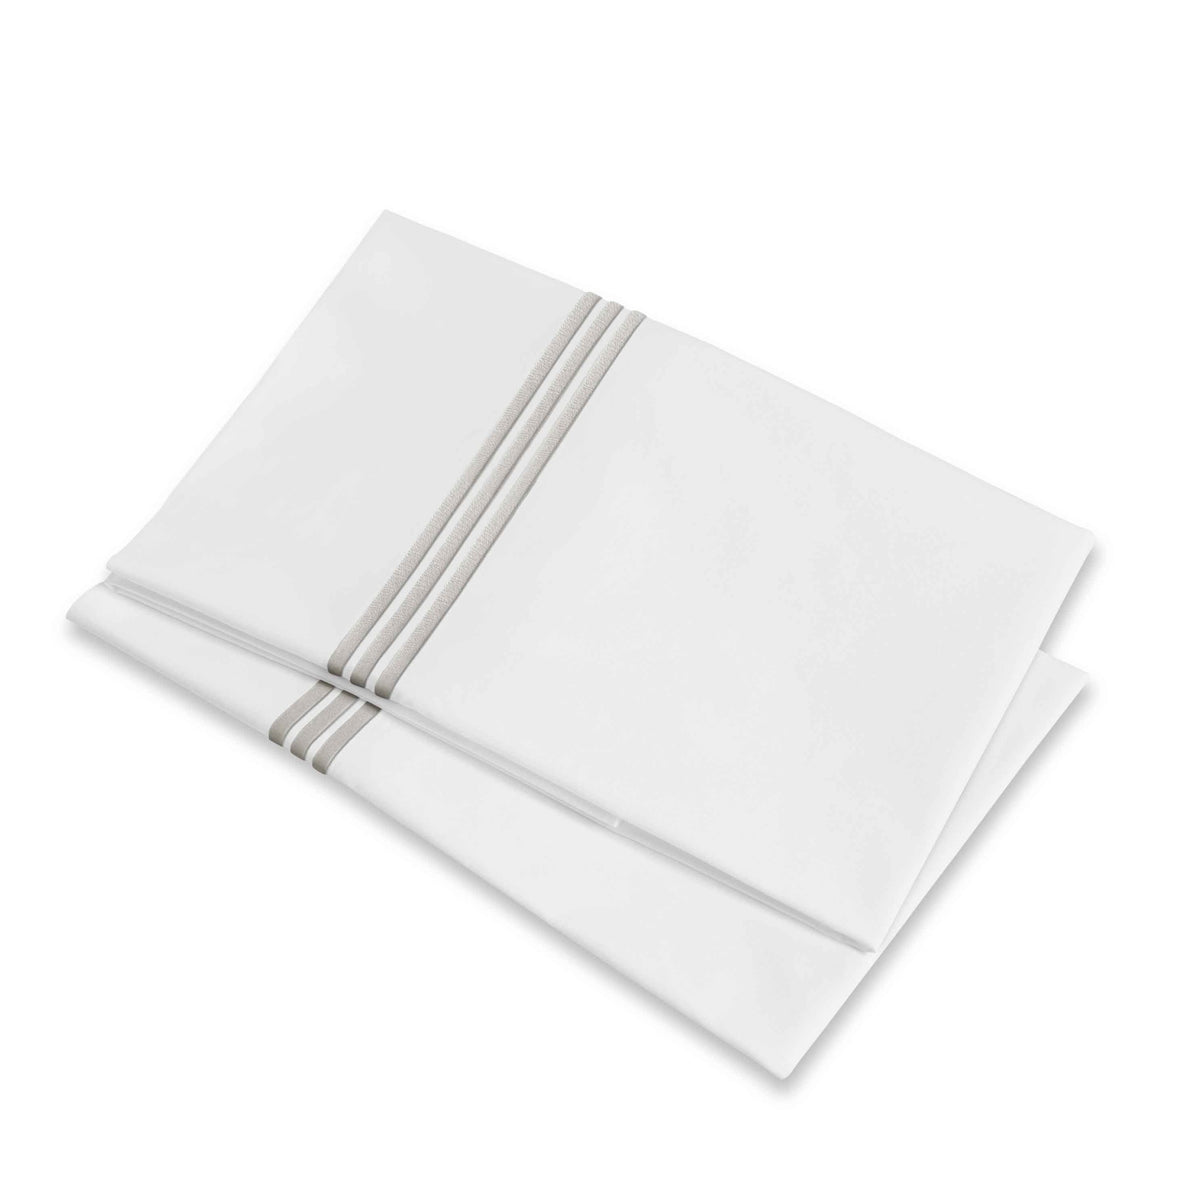 Folded Pillowcases of Signoria Platinum Percale Bedding in White/Pearl Color